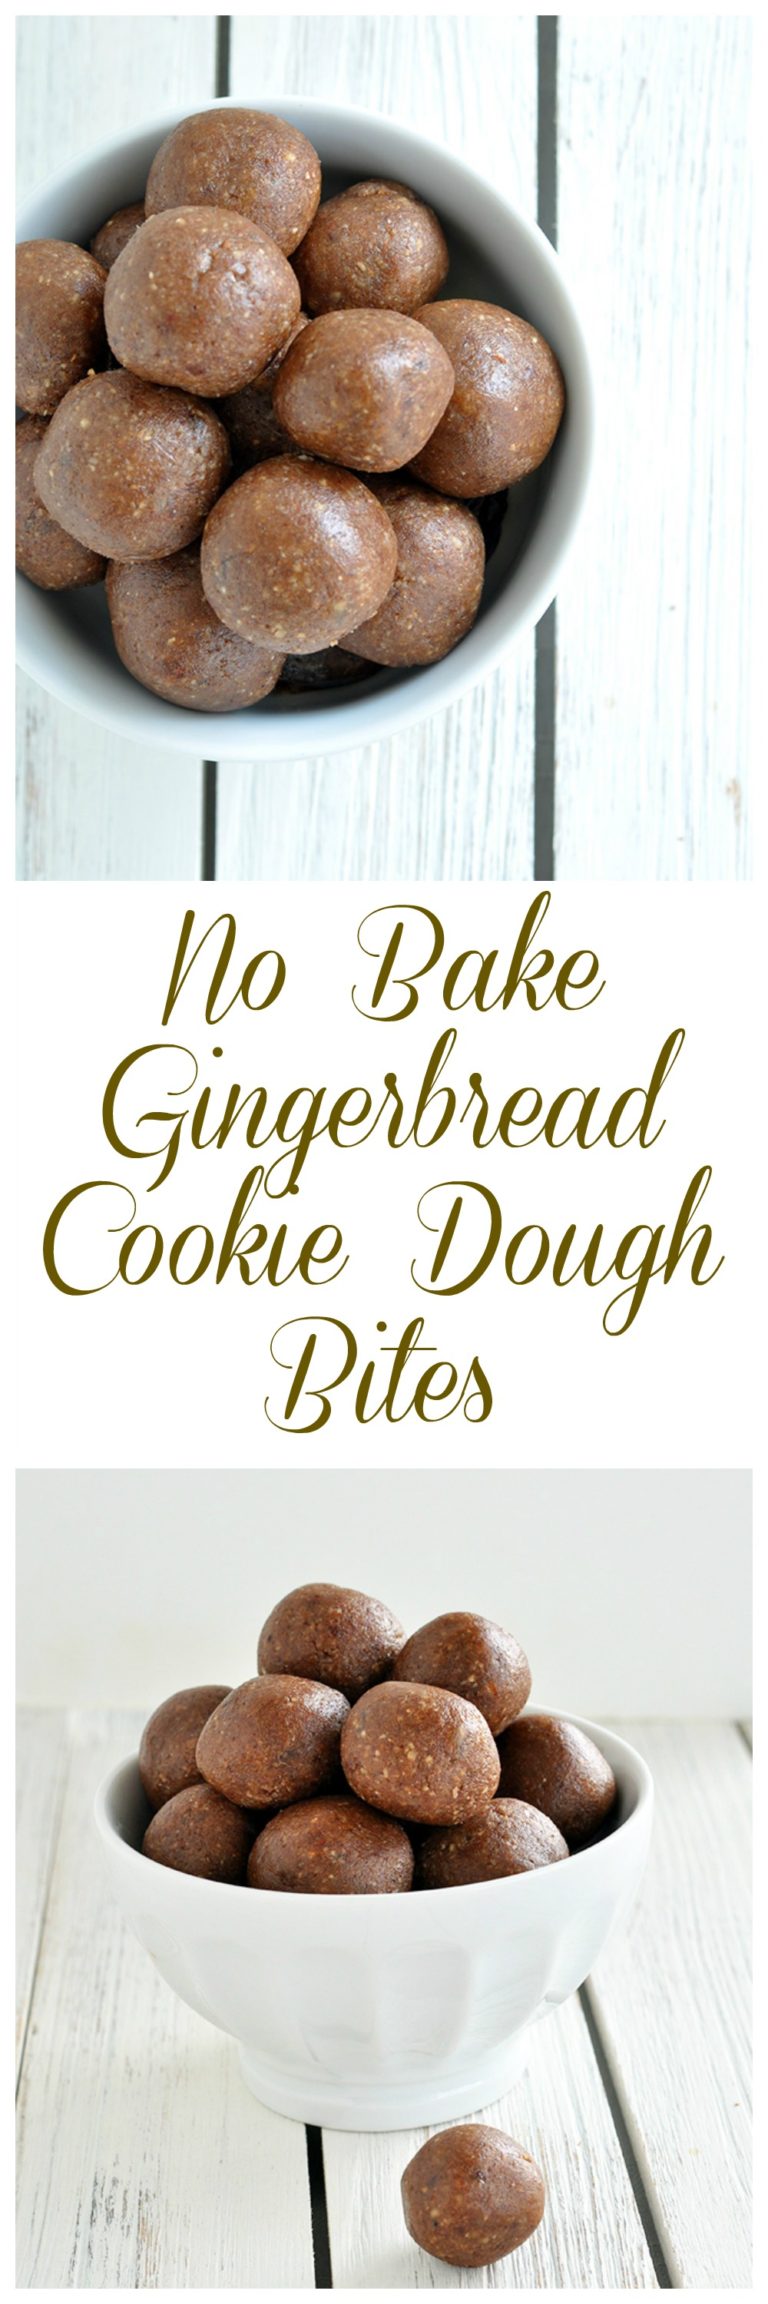 No Bake Gingerbread Cookies (Vegan) - My Whole Food Life